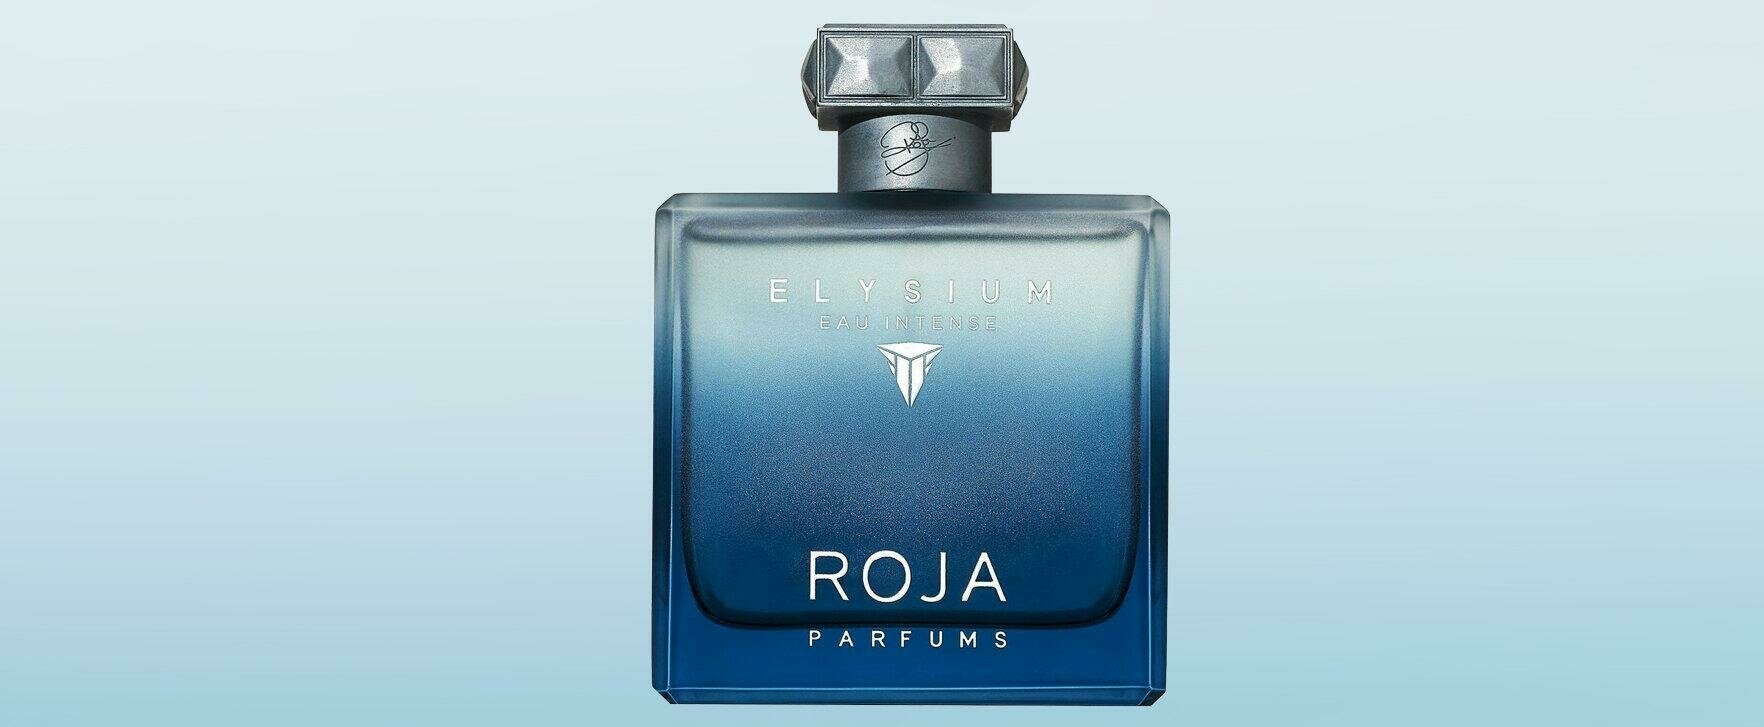 Intensely Refreshing: Roja Parfums Presents the Reinterpretation of "Elysium"